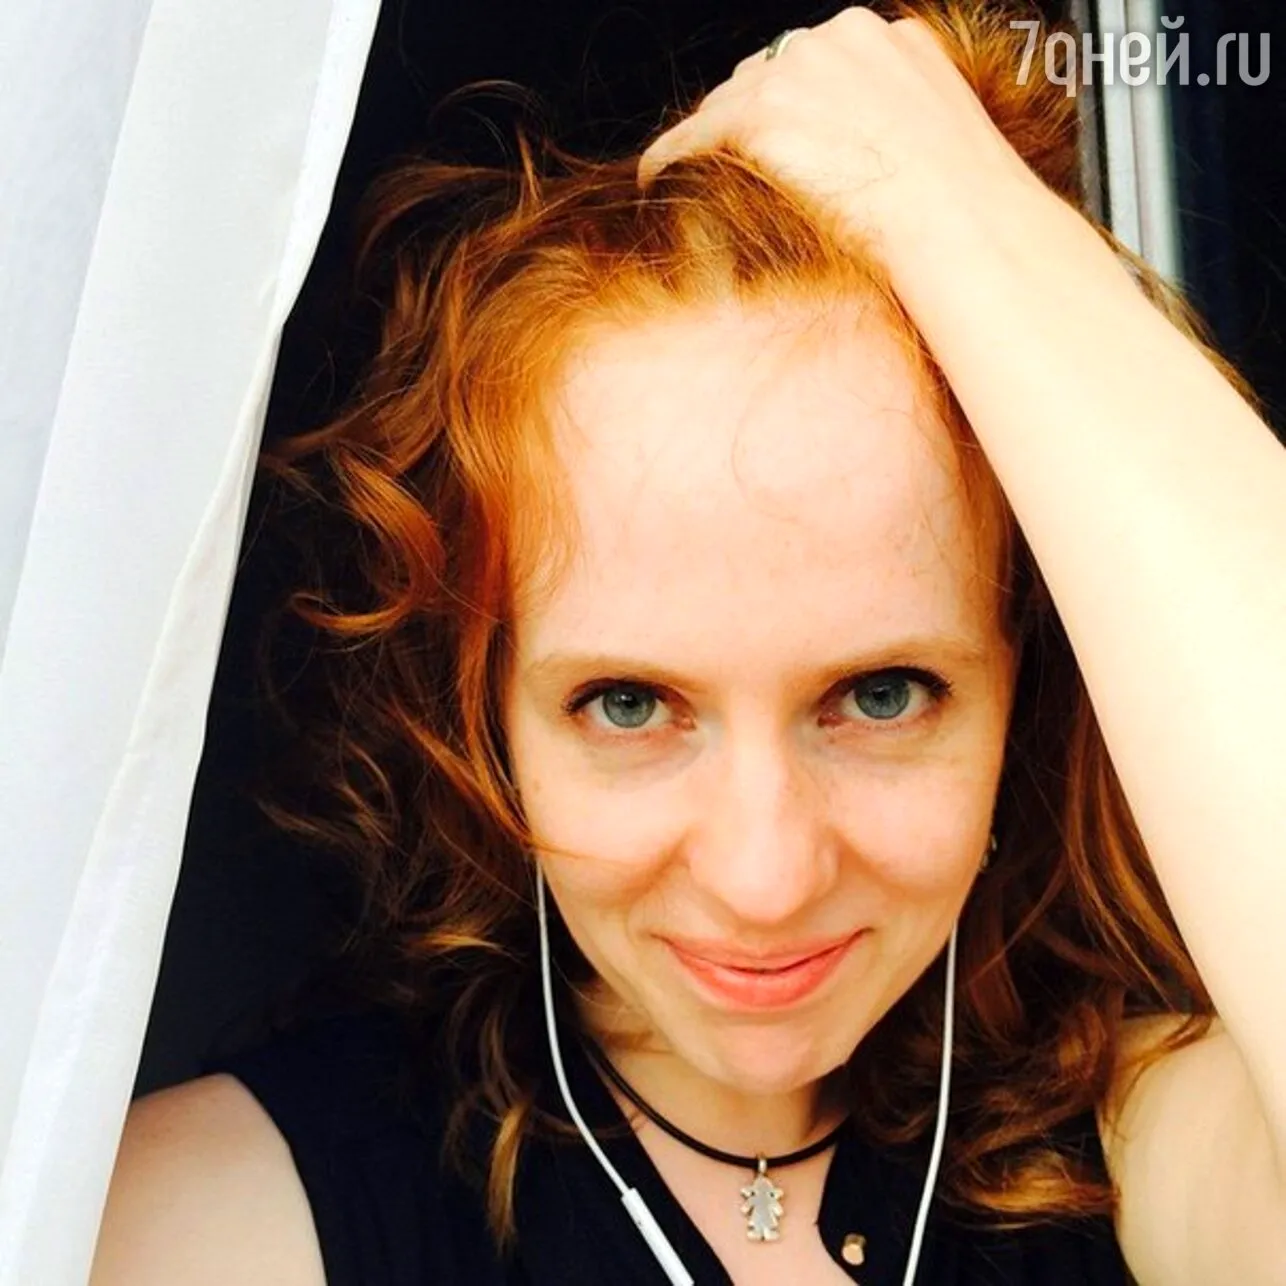 36-Летняя Дарья Белоусова